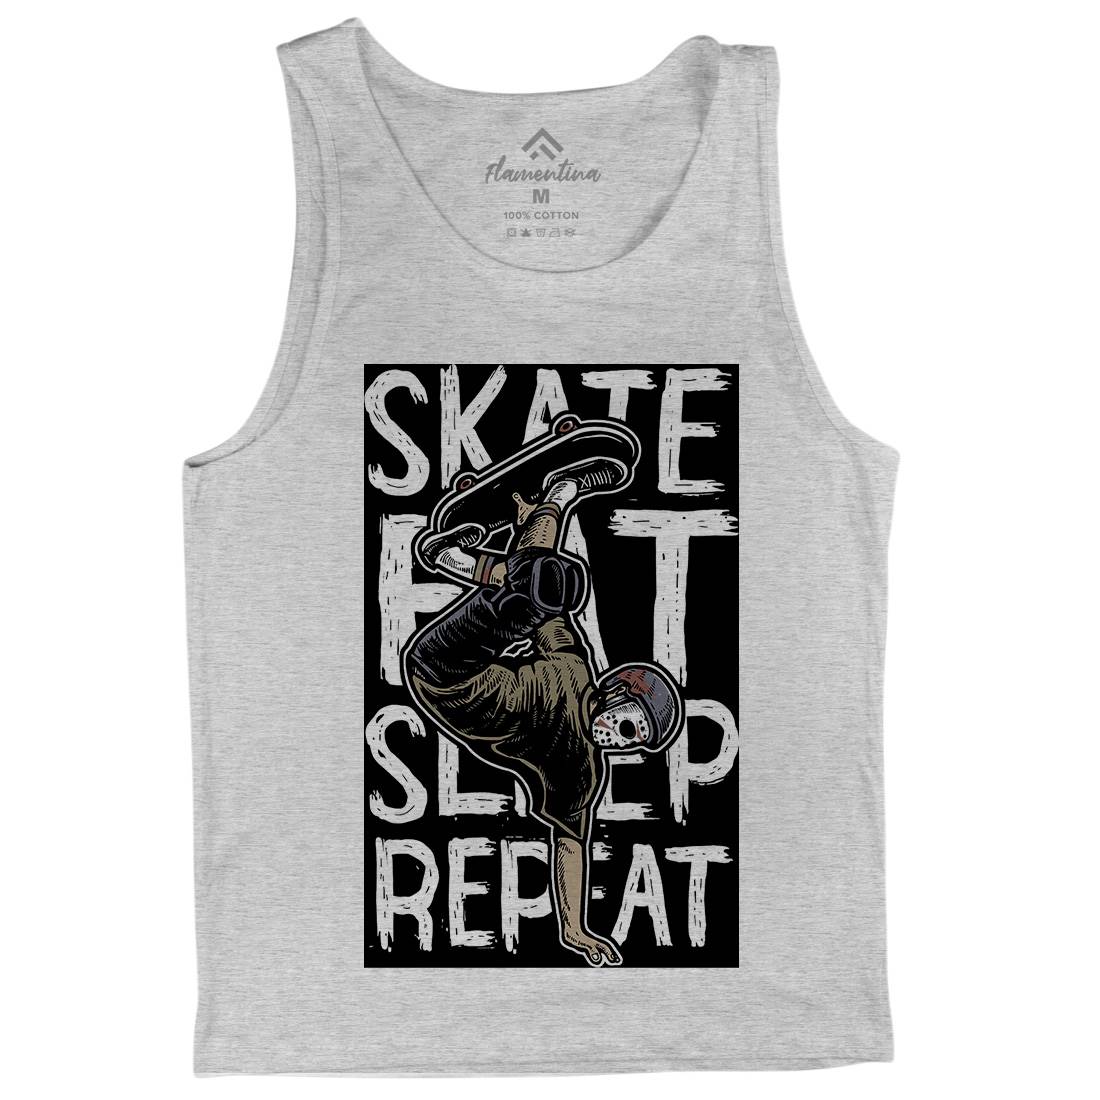 Eat Sleep Repeat Mens Tank Top Vest Skate A572